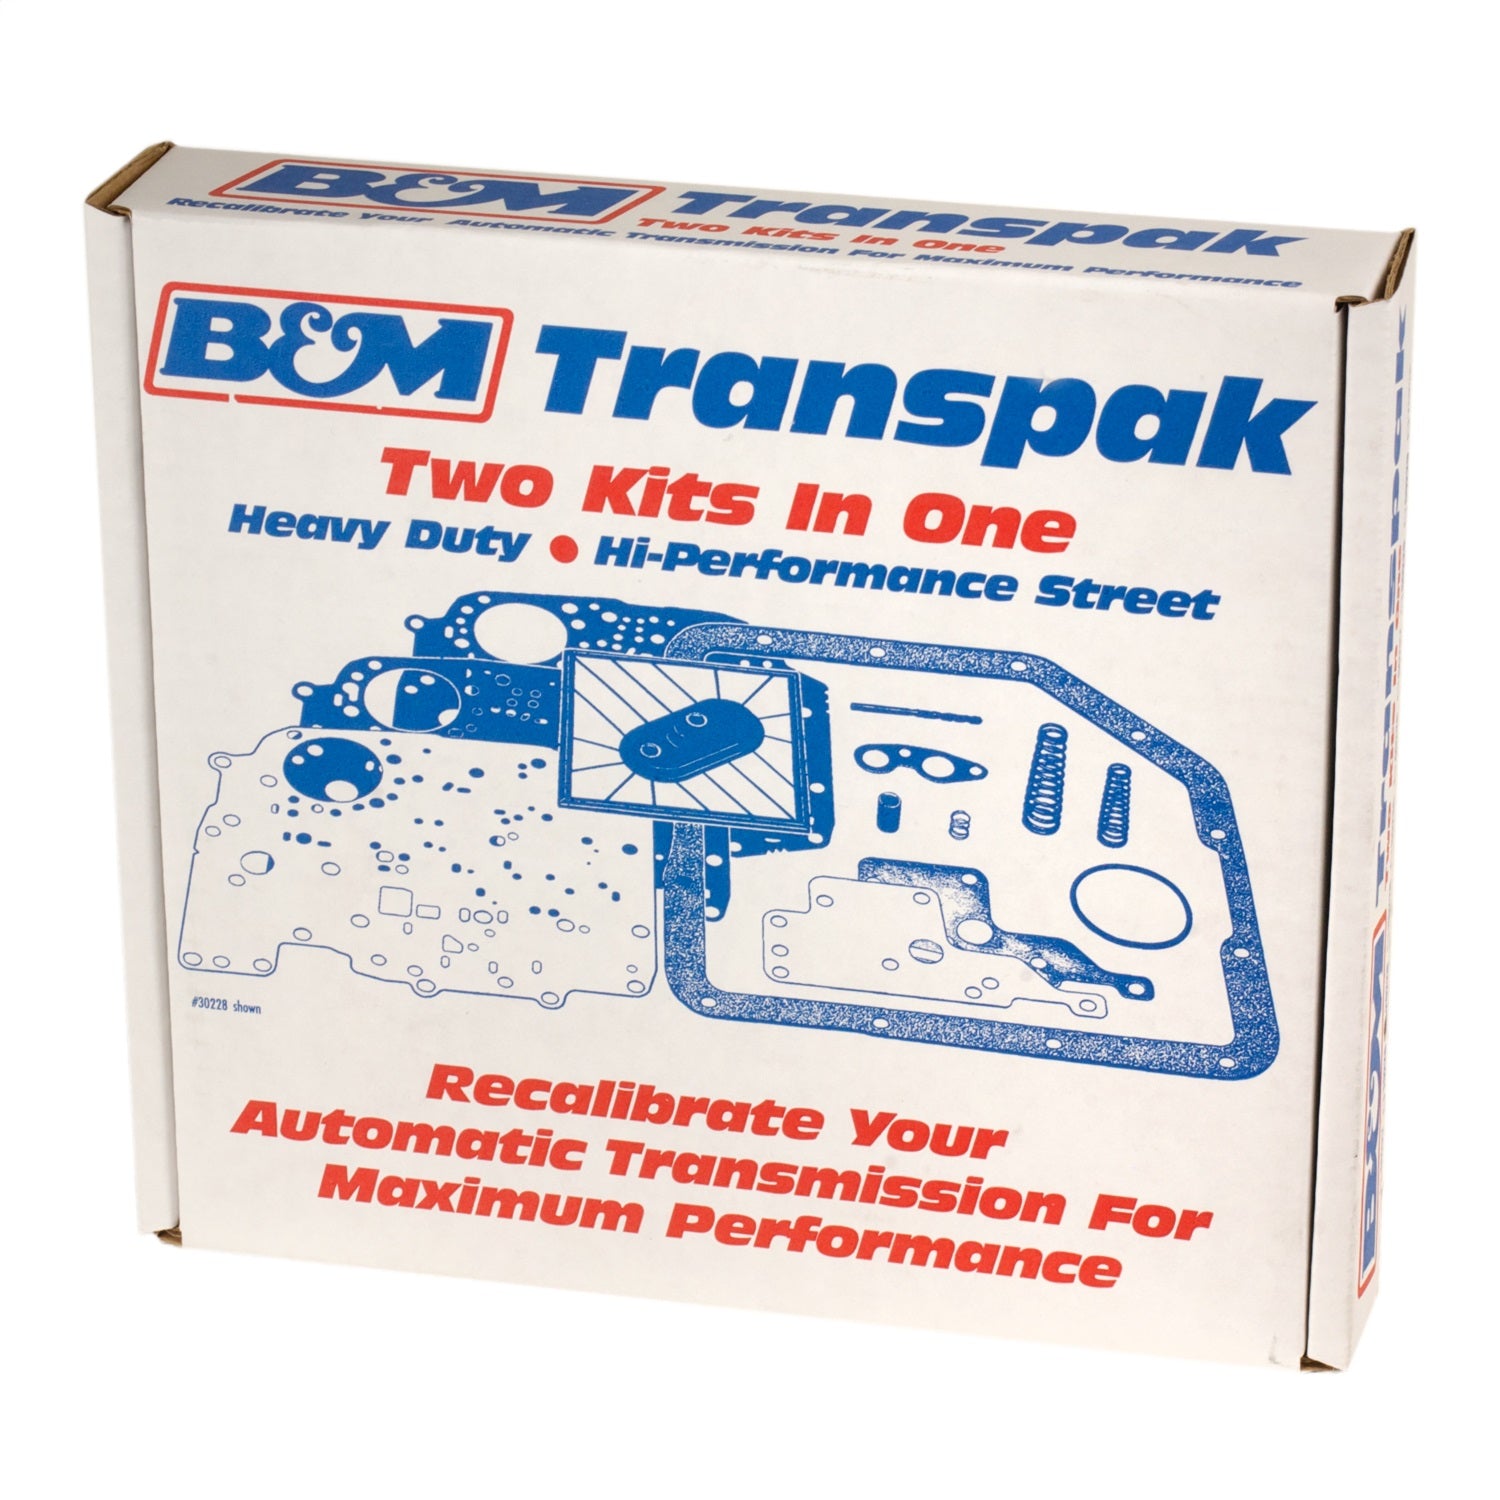 B&M 20228 Transpak Automatic Transmission Recalibration Kit